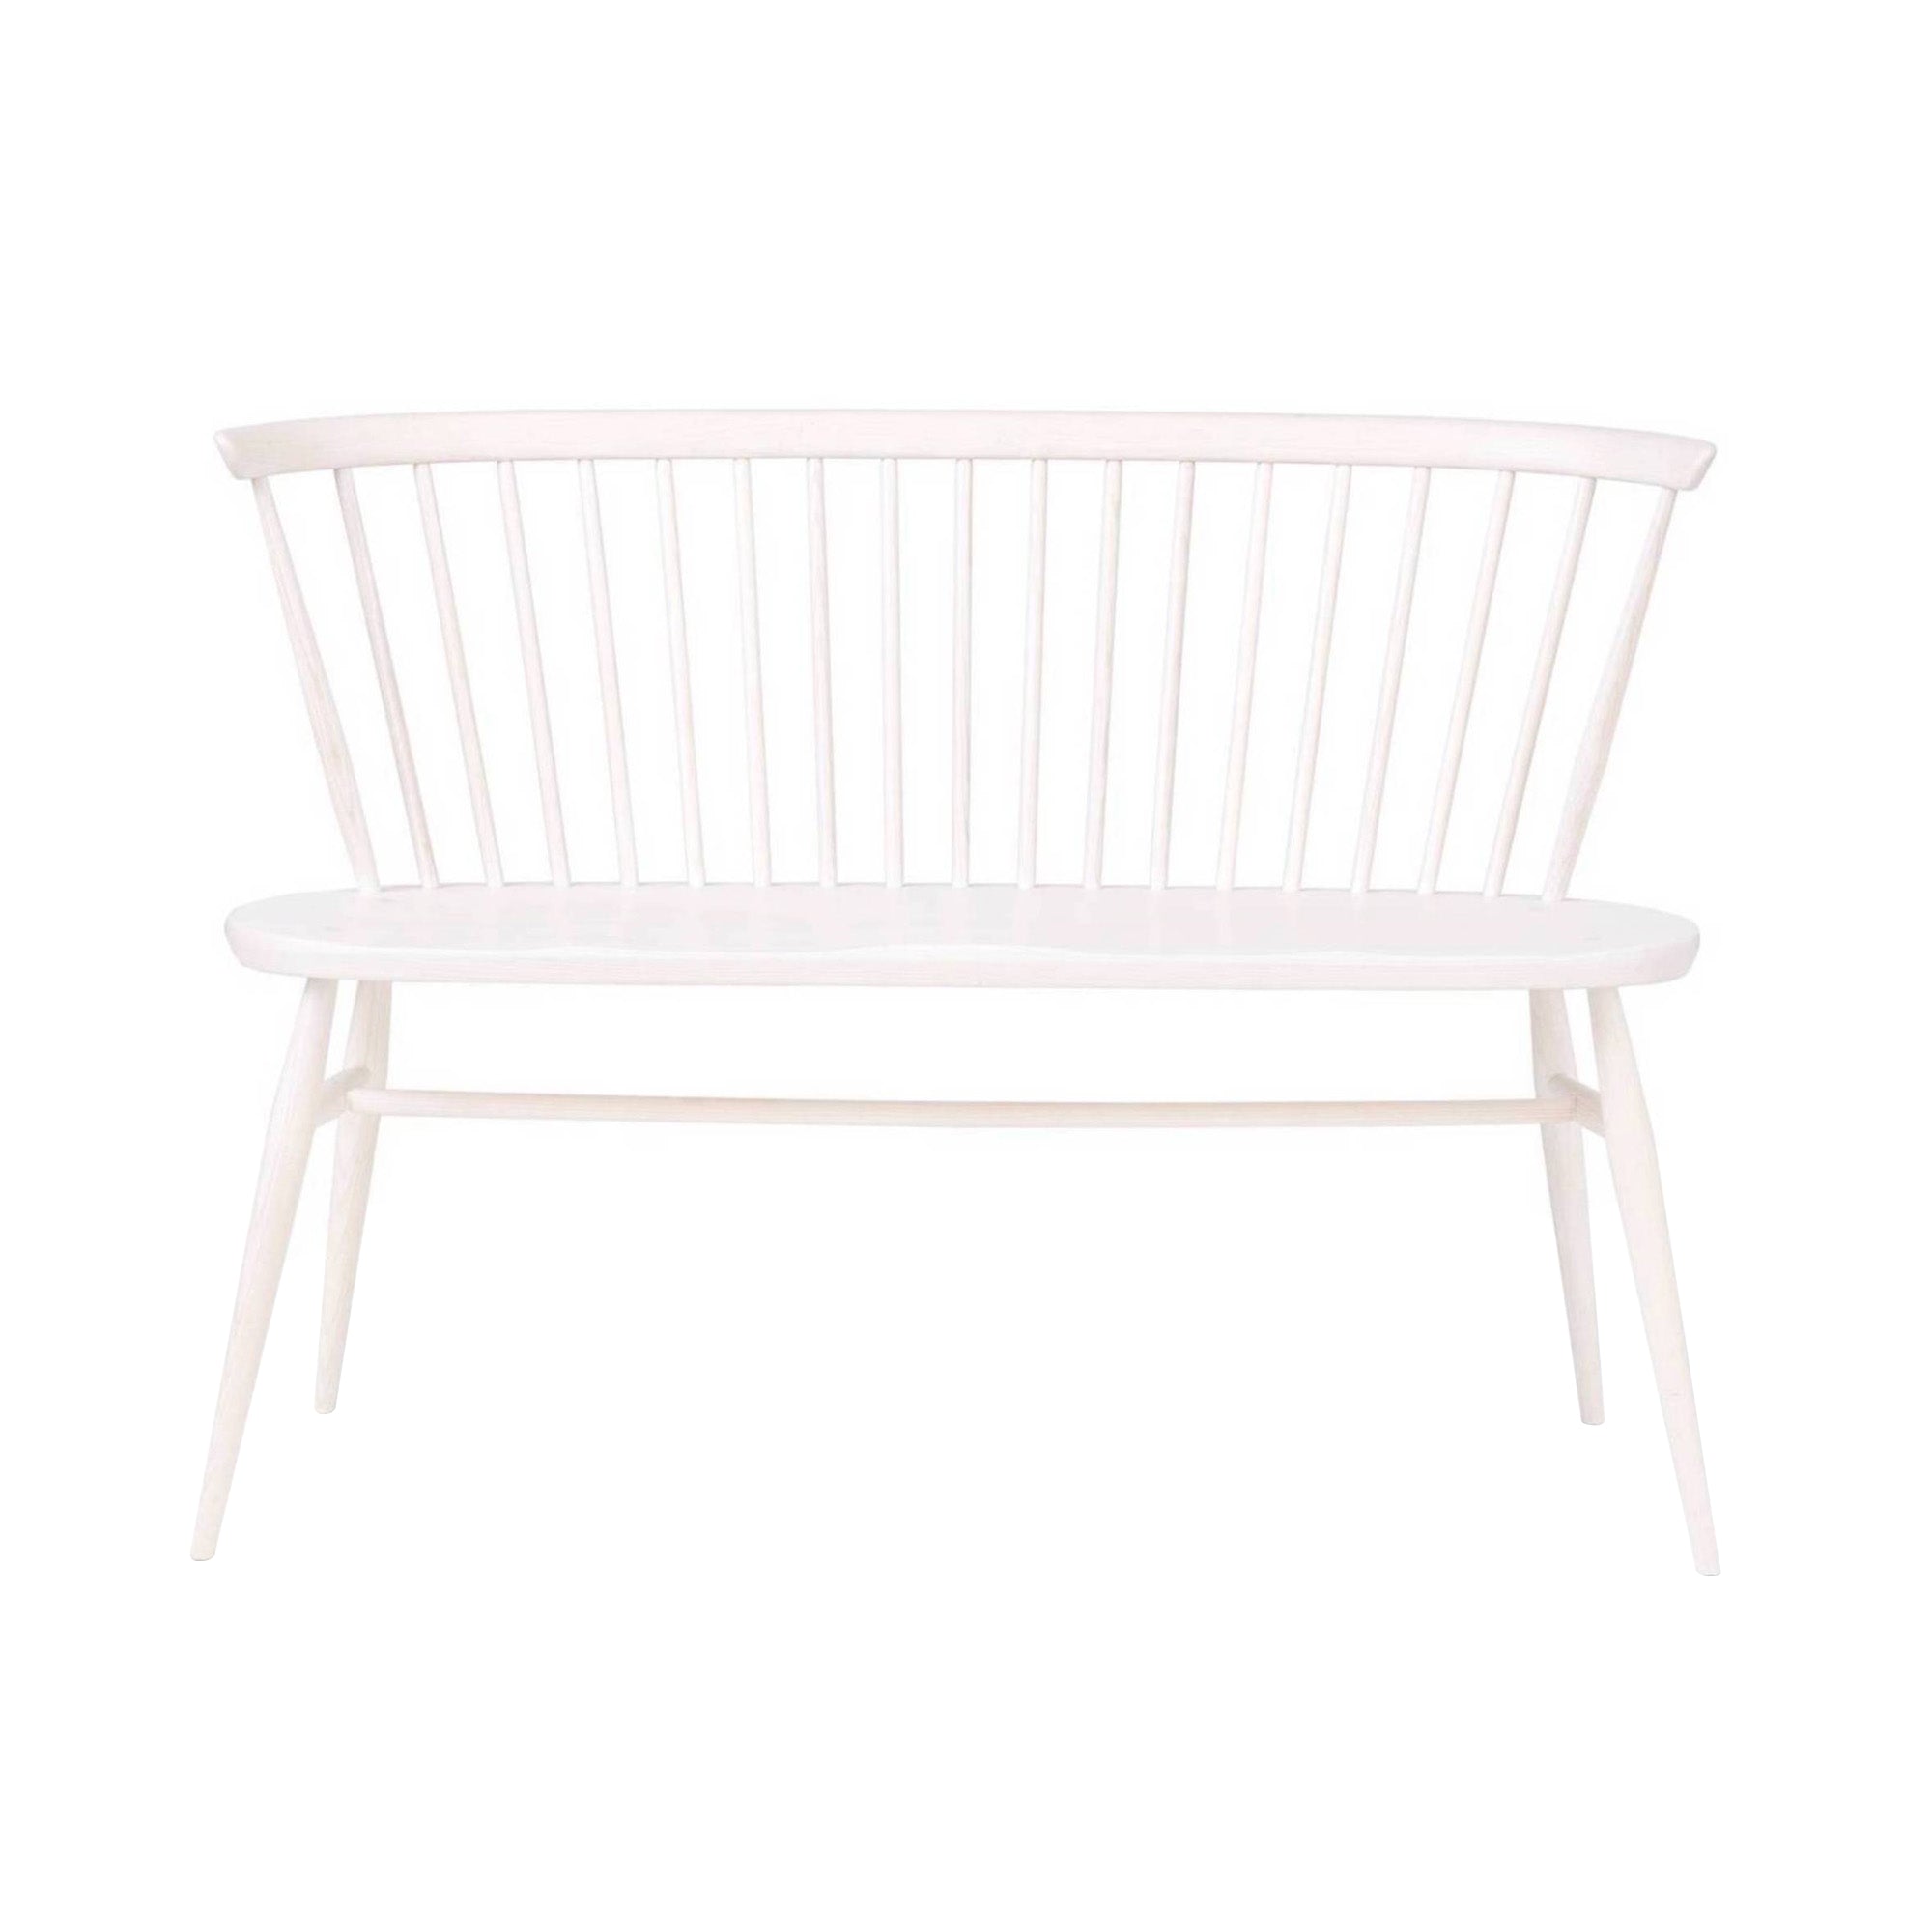 Originals Love Seat Bench: Off White